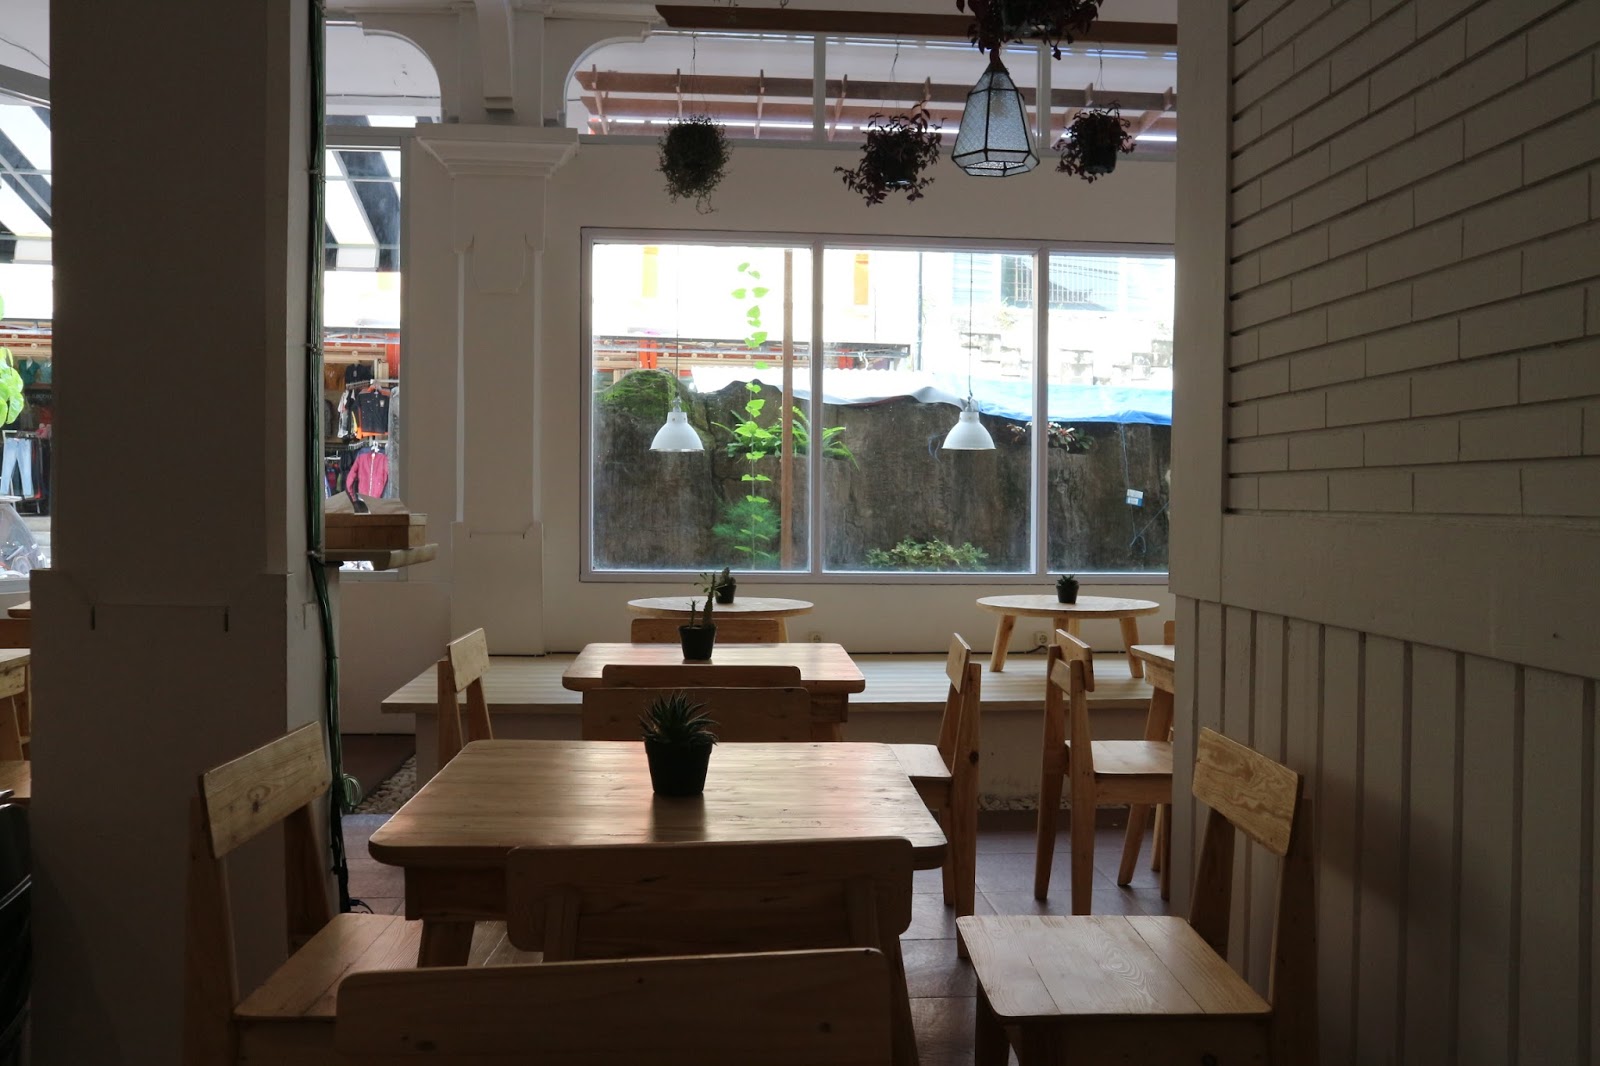 Small Cafe Interior Design